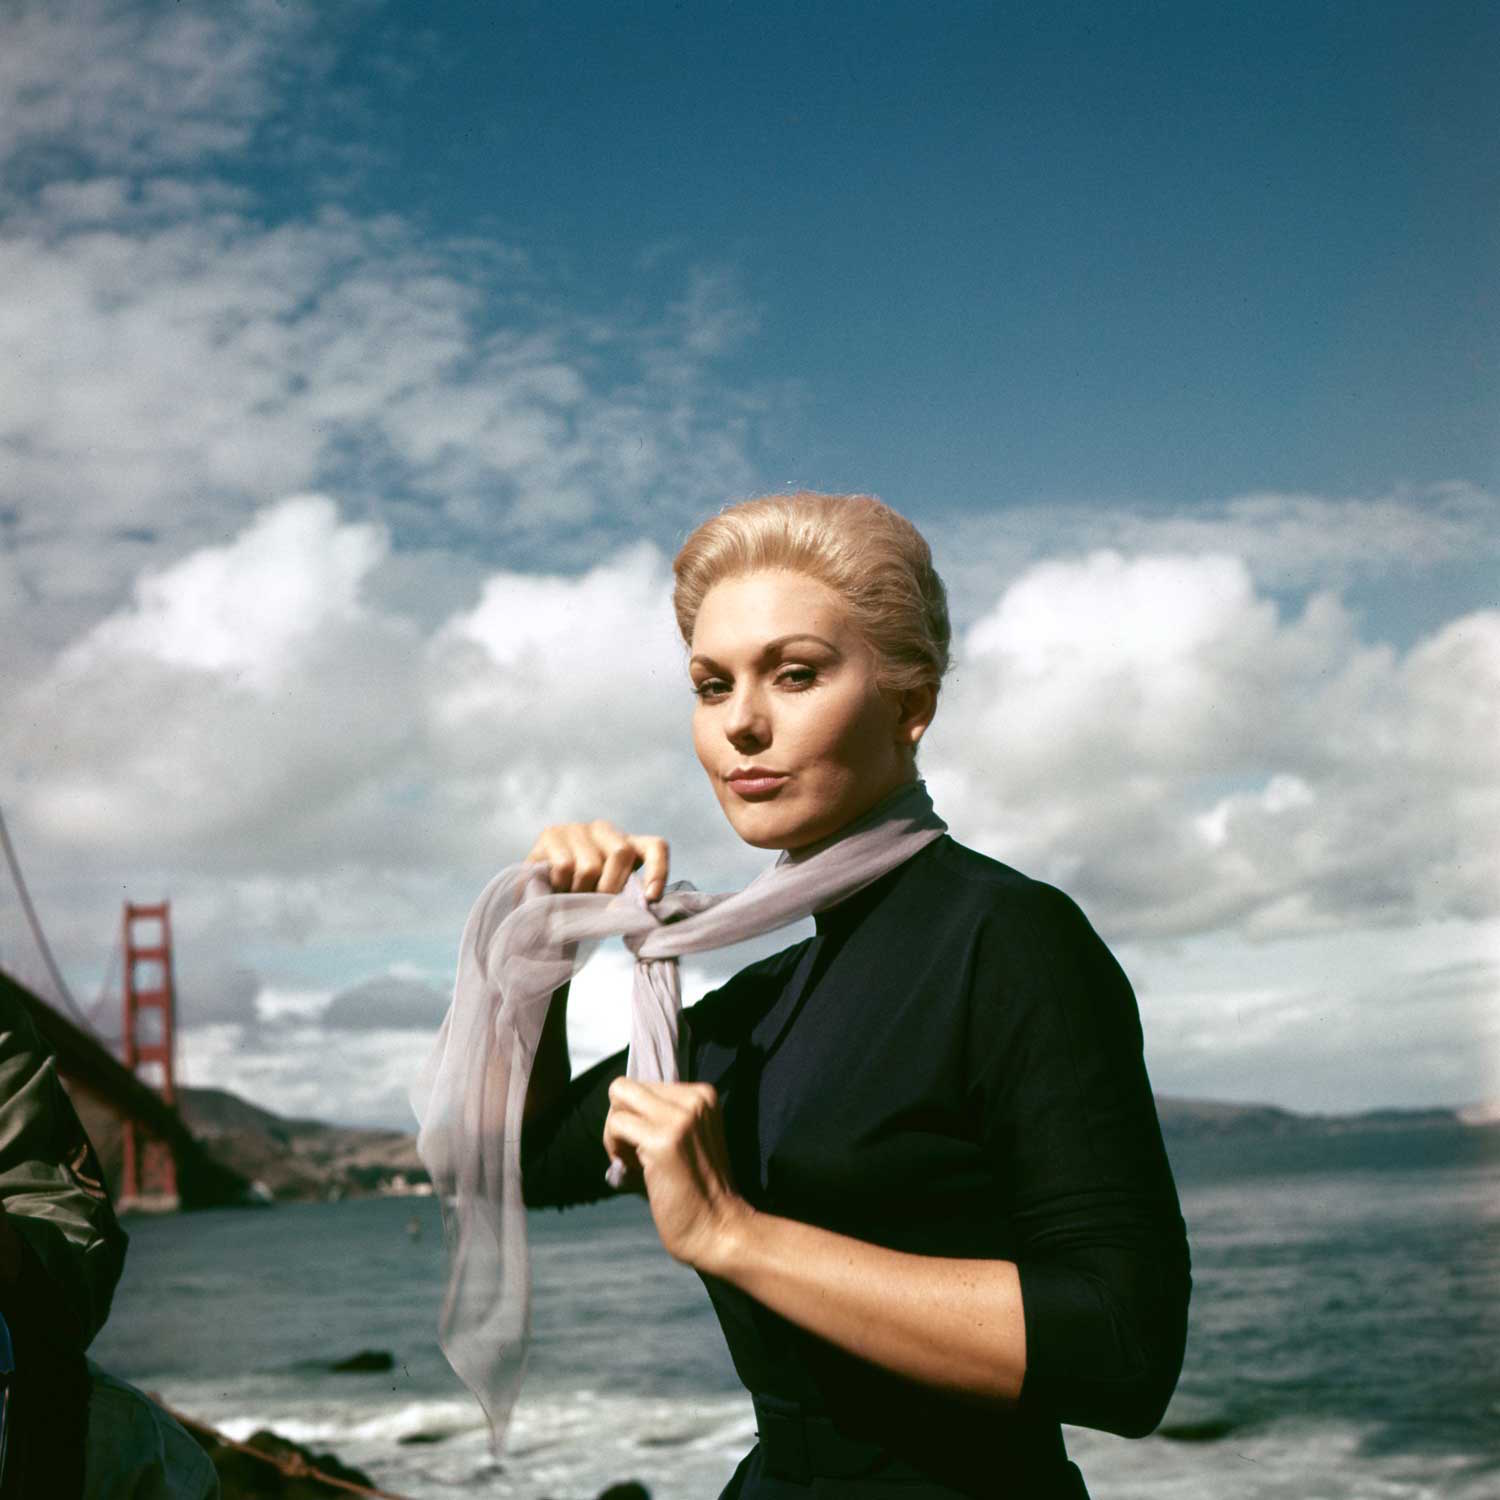 Wishing a happy birthday to Kim Novak, here on location in San Francisco for VERTIGO (1958). 